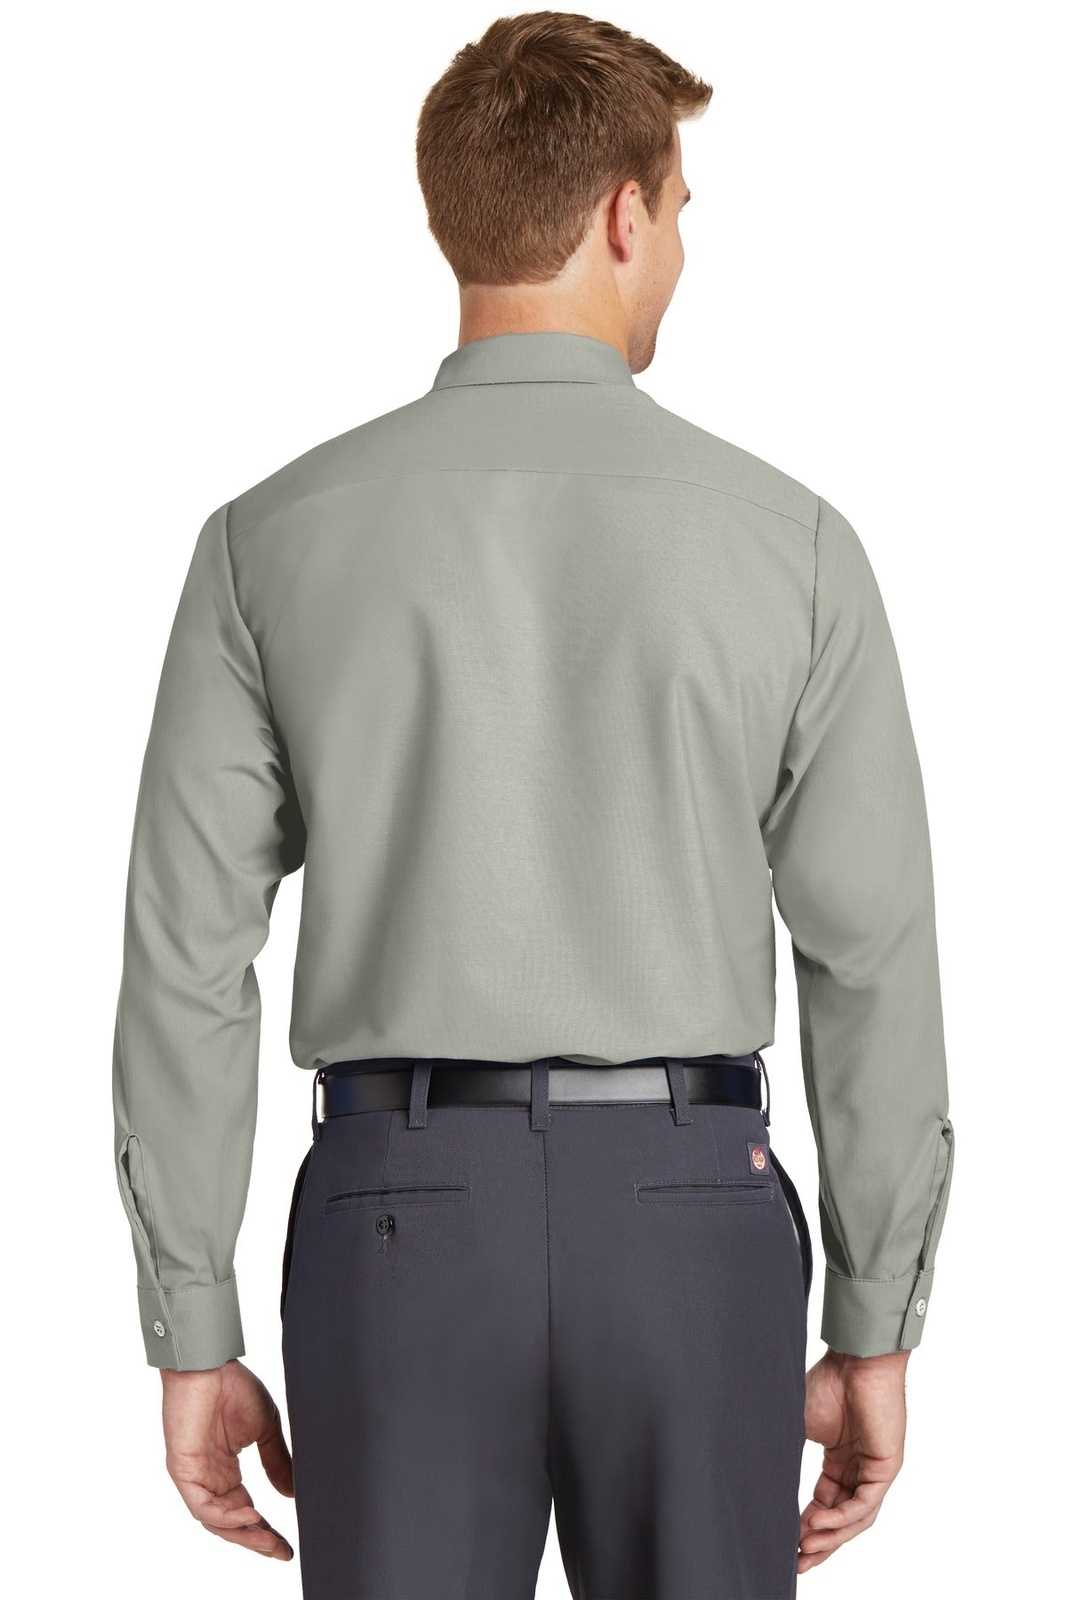 Red Kap SP14 Long Sleeve Industrial Work Shirt - Light Gray - HIT a Double - 1